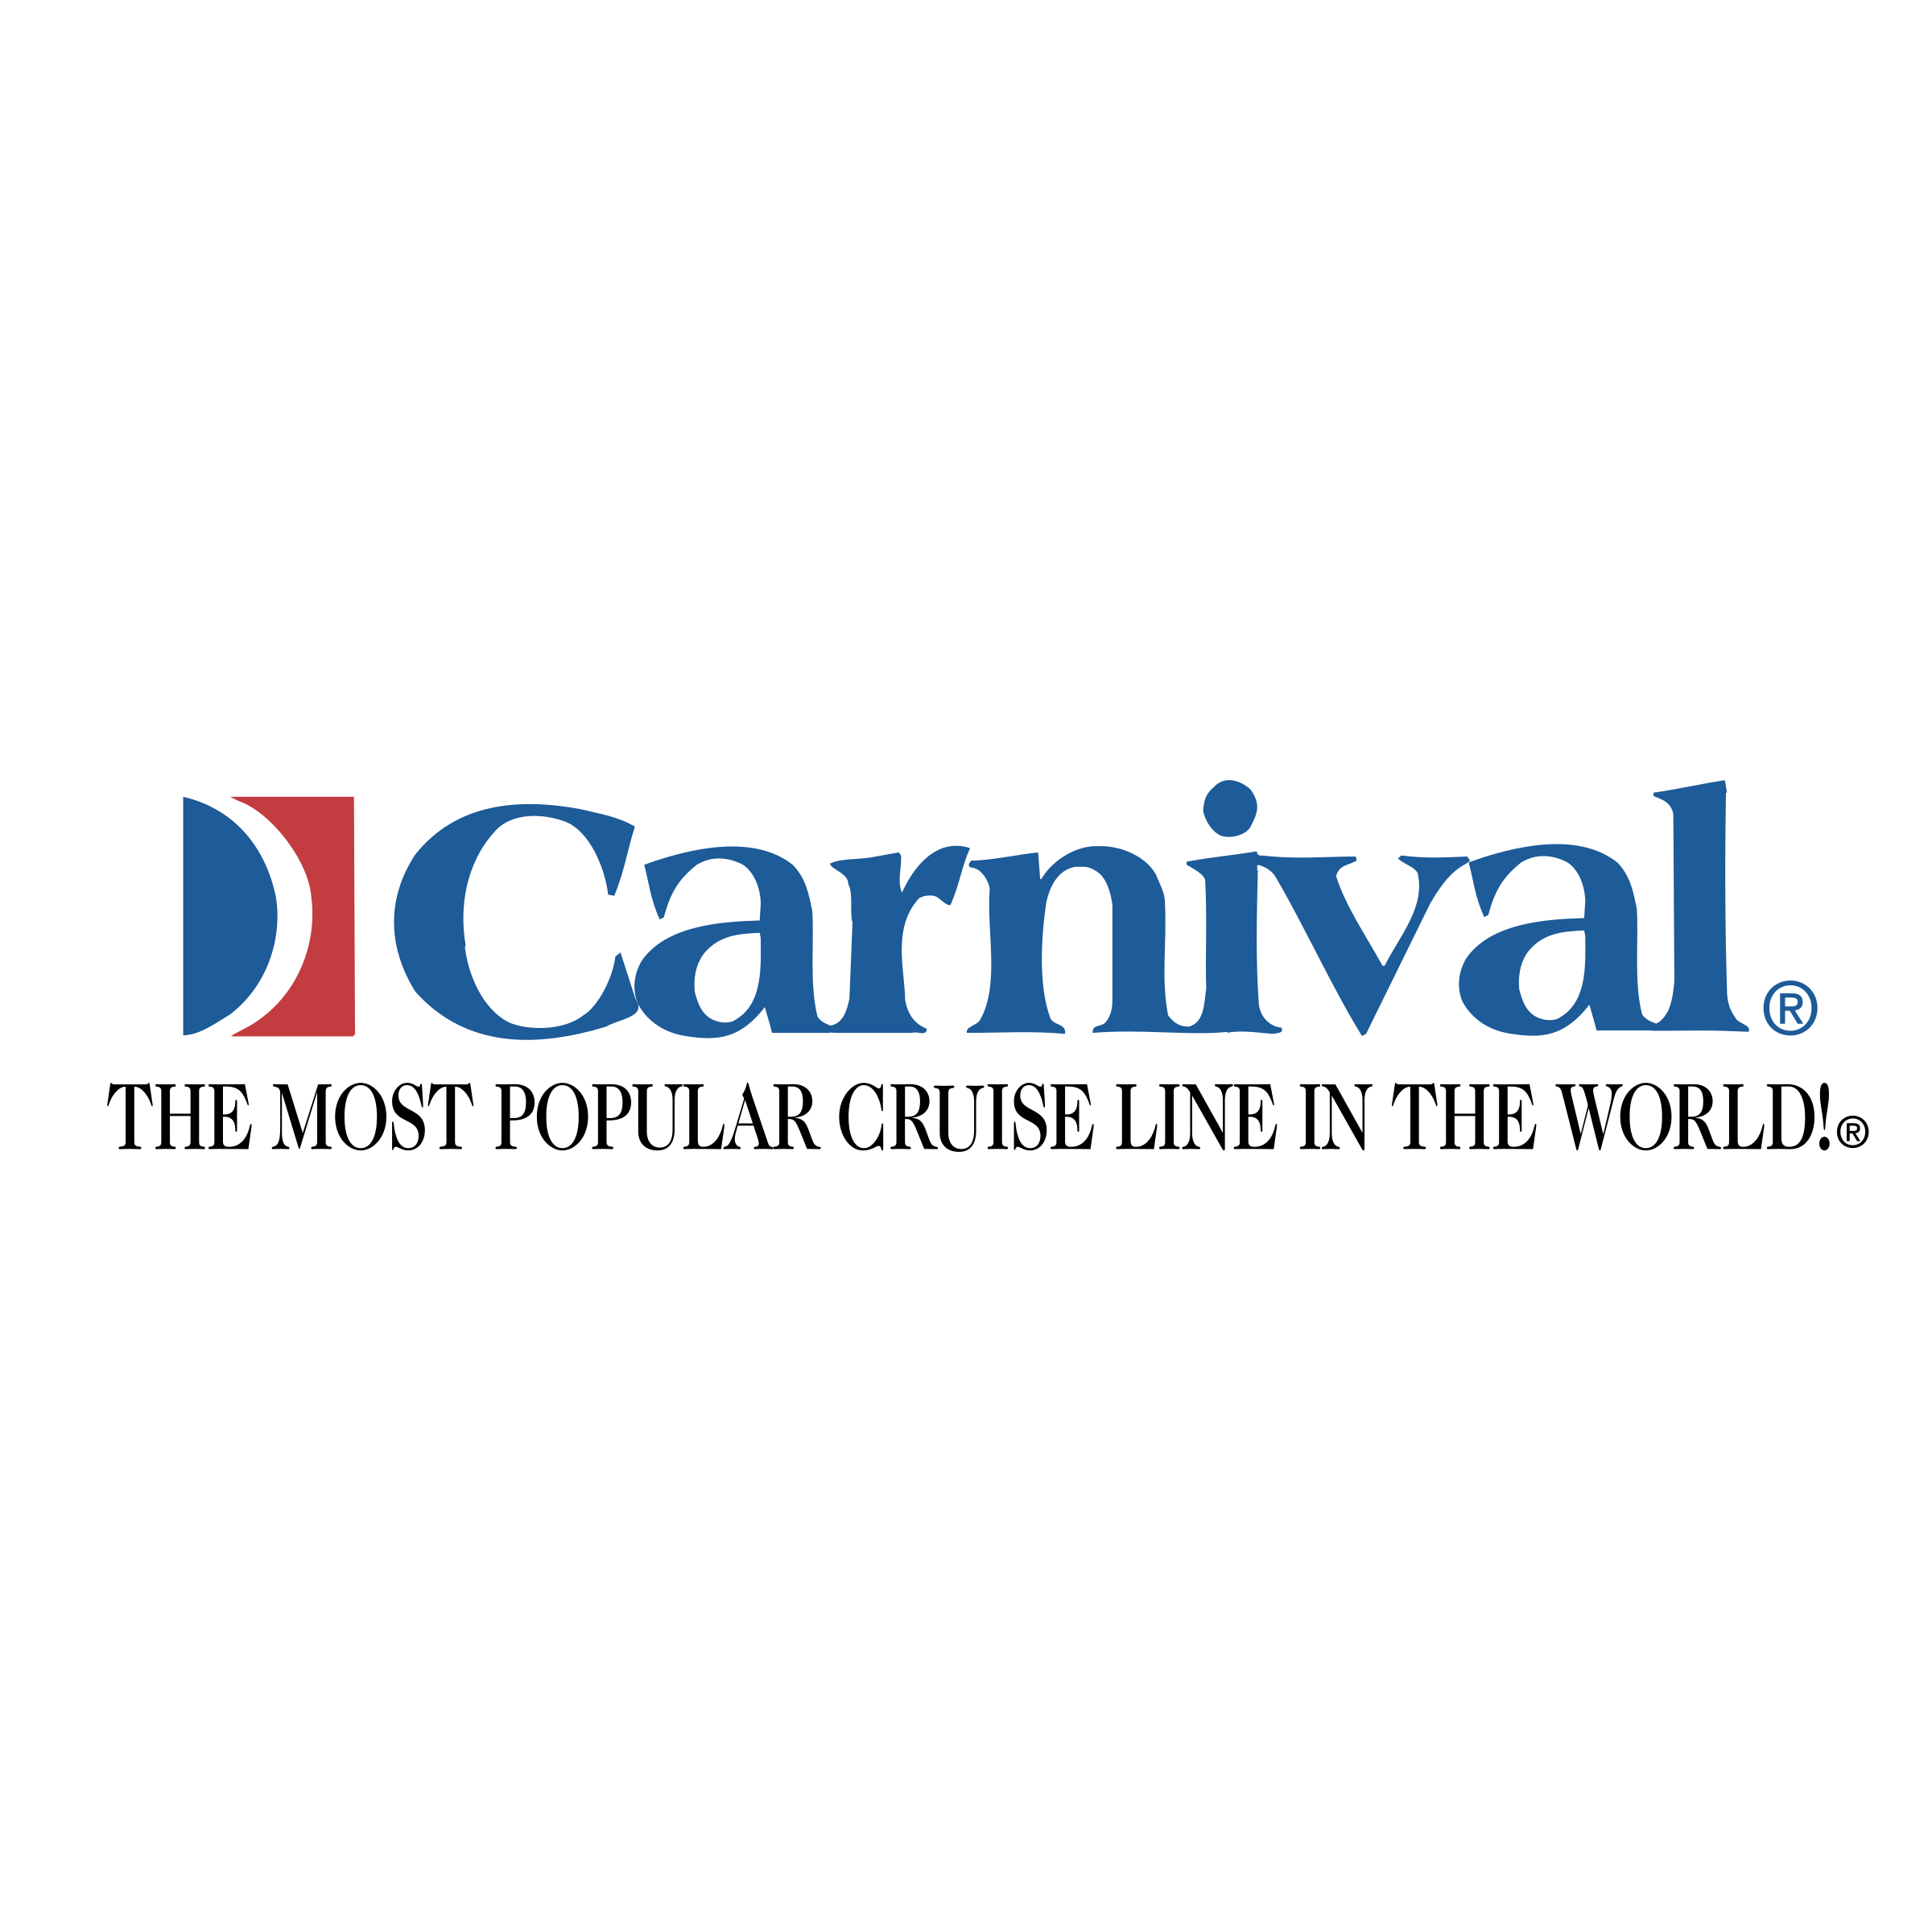 Carnival Logo - Carnival Logo PNG Transparent & SVG Vector - Freebie Supply